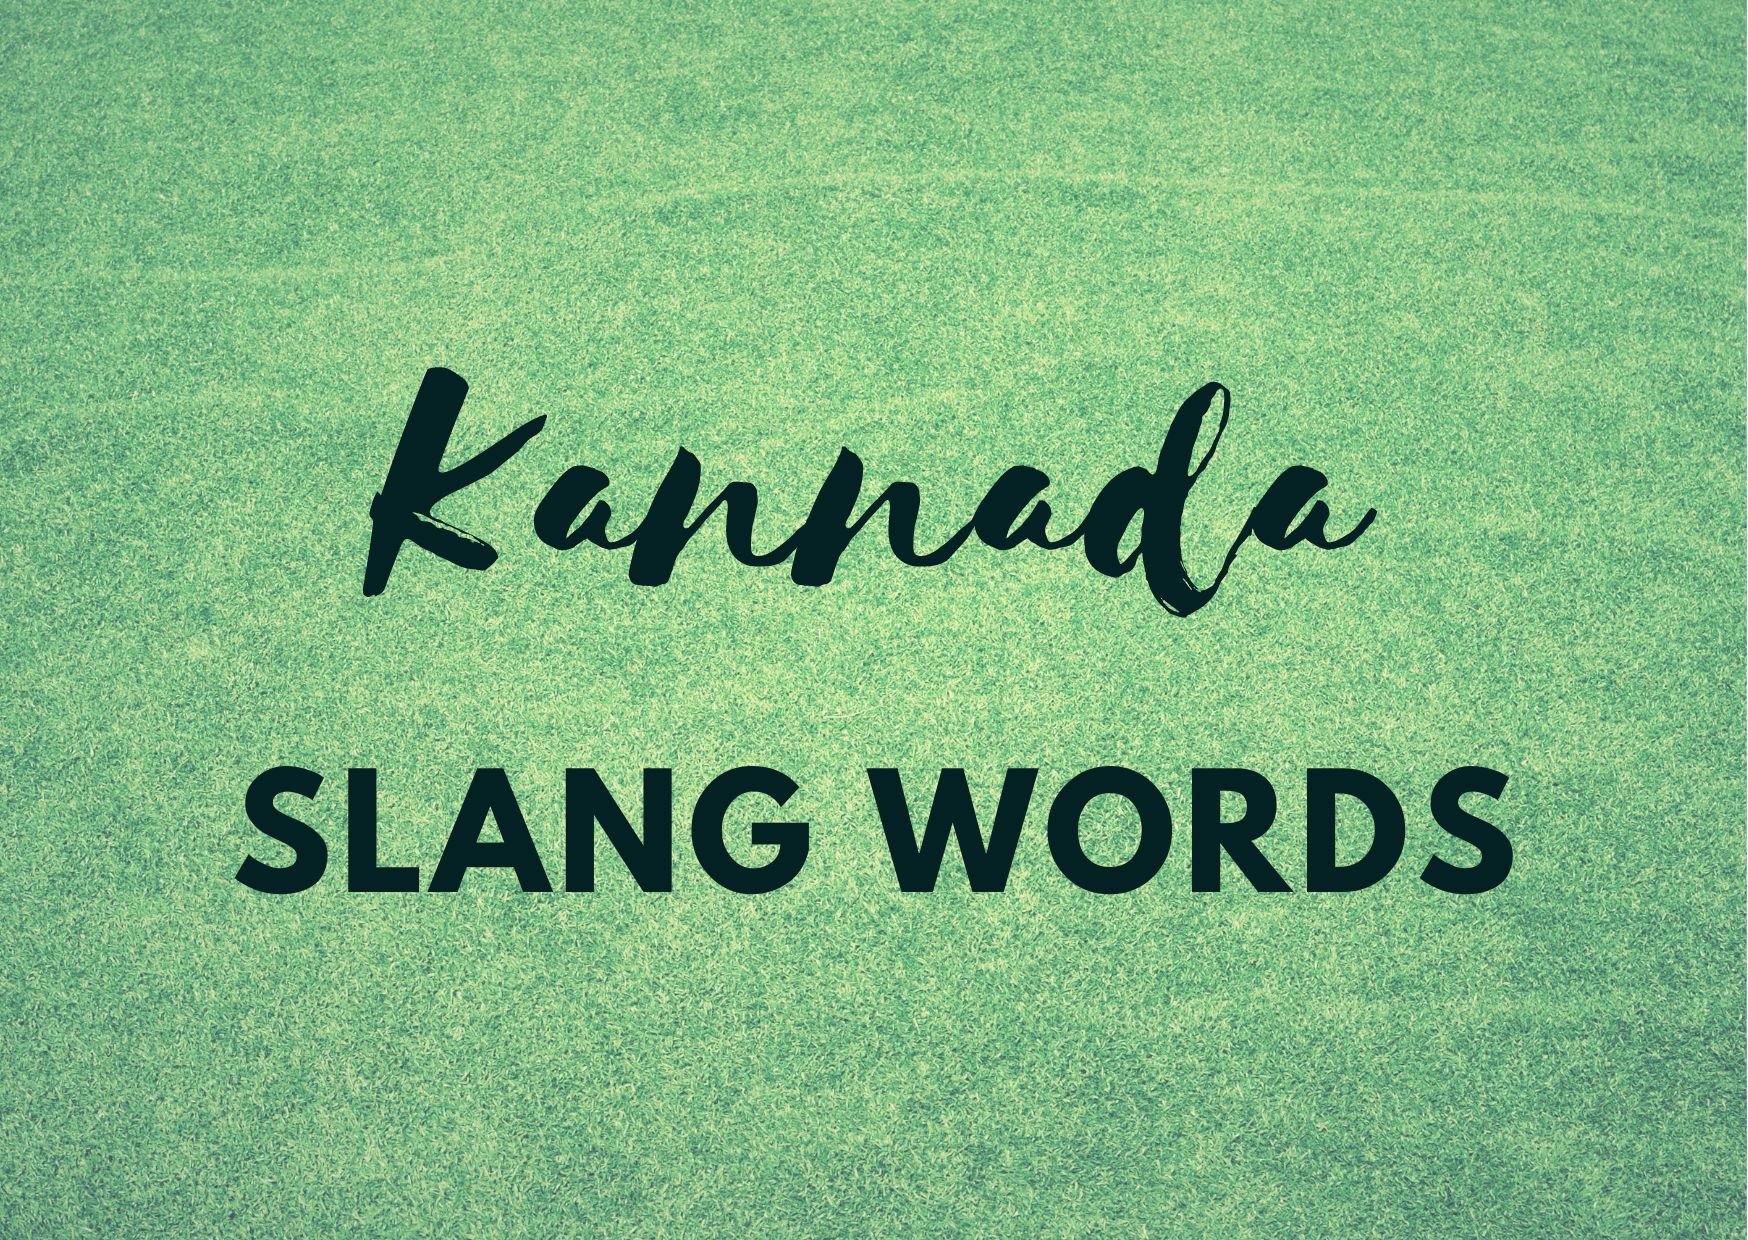 Kannada slang words